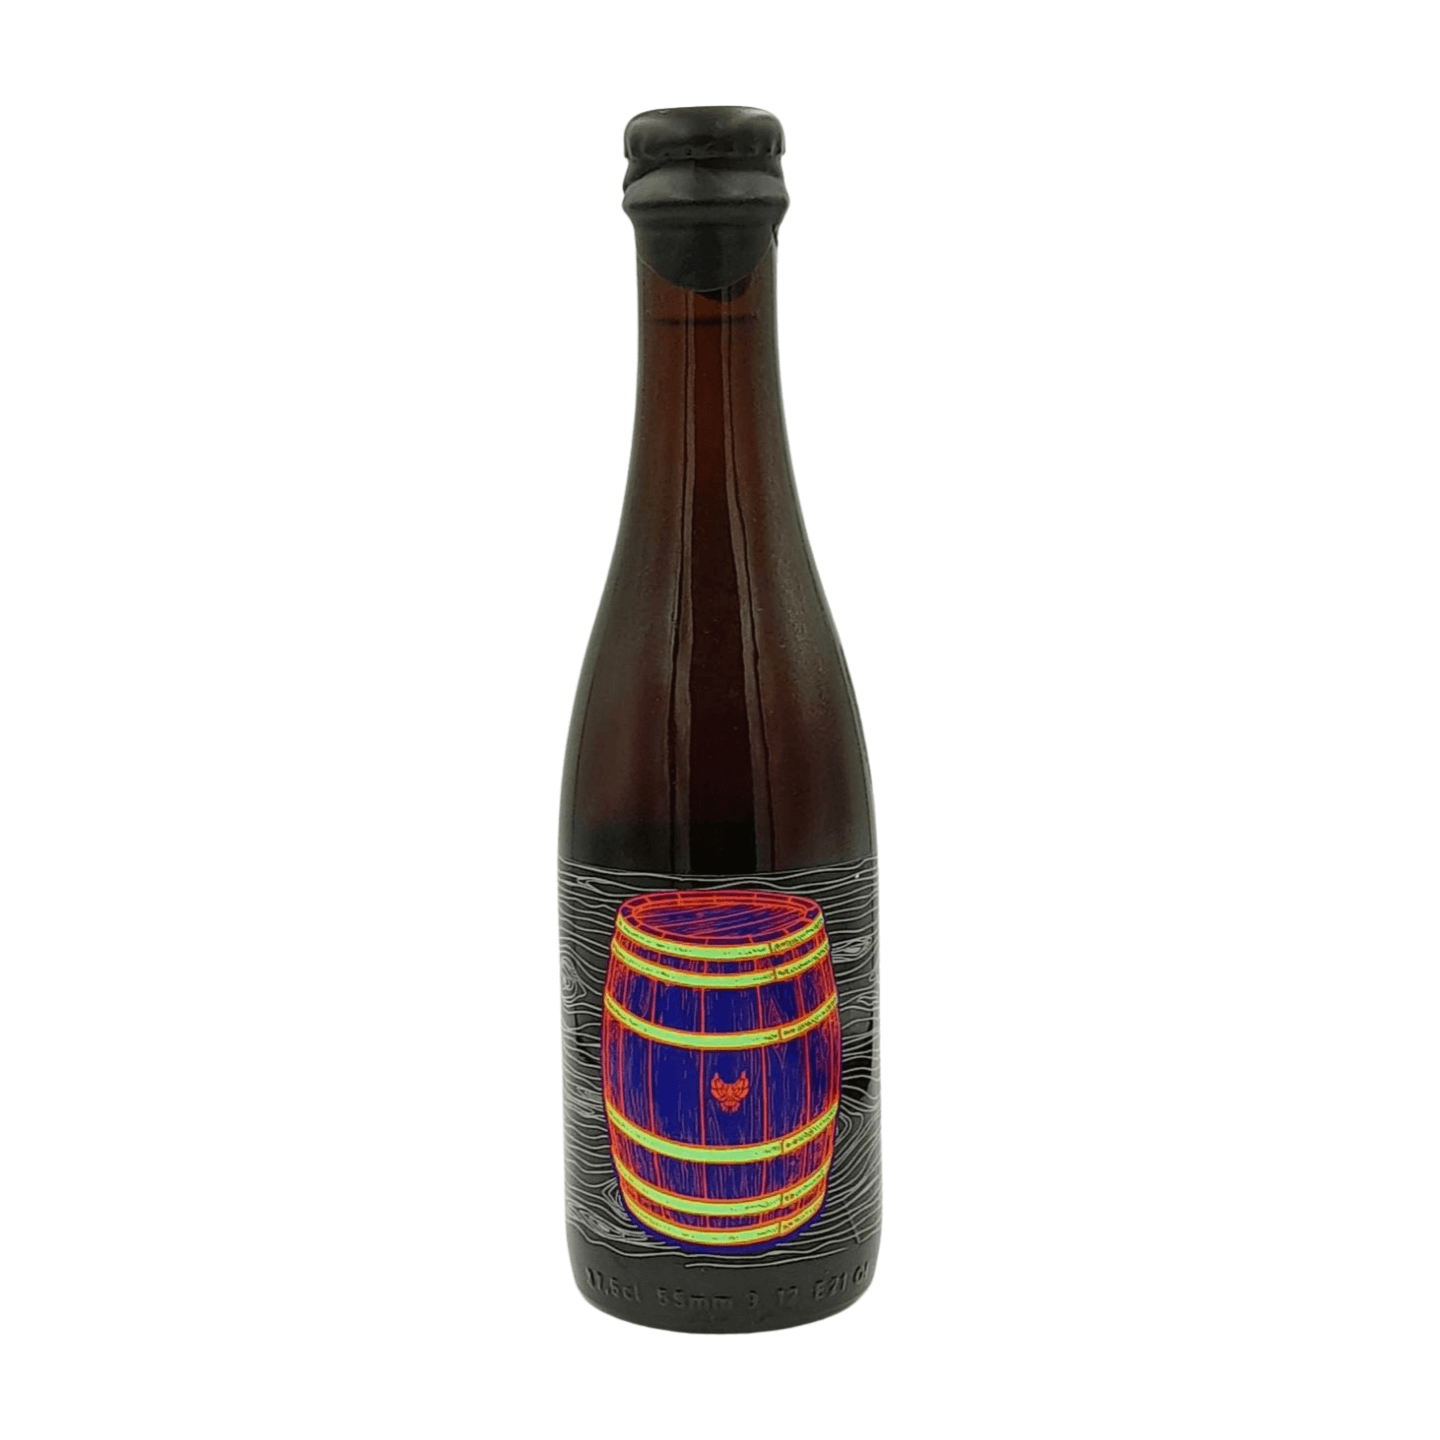 Kaapse Brouwers X Ramses Bier Brandgans BA 2021 | Brandy BA Wheat Wine Webshop Online Verdins Bierwinkel Rotterdam